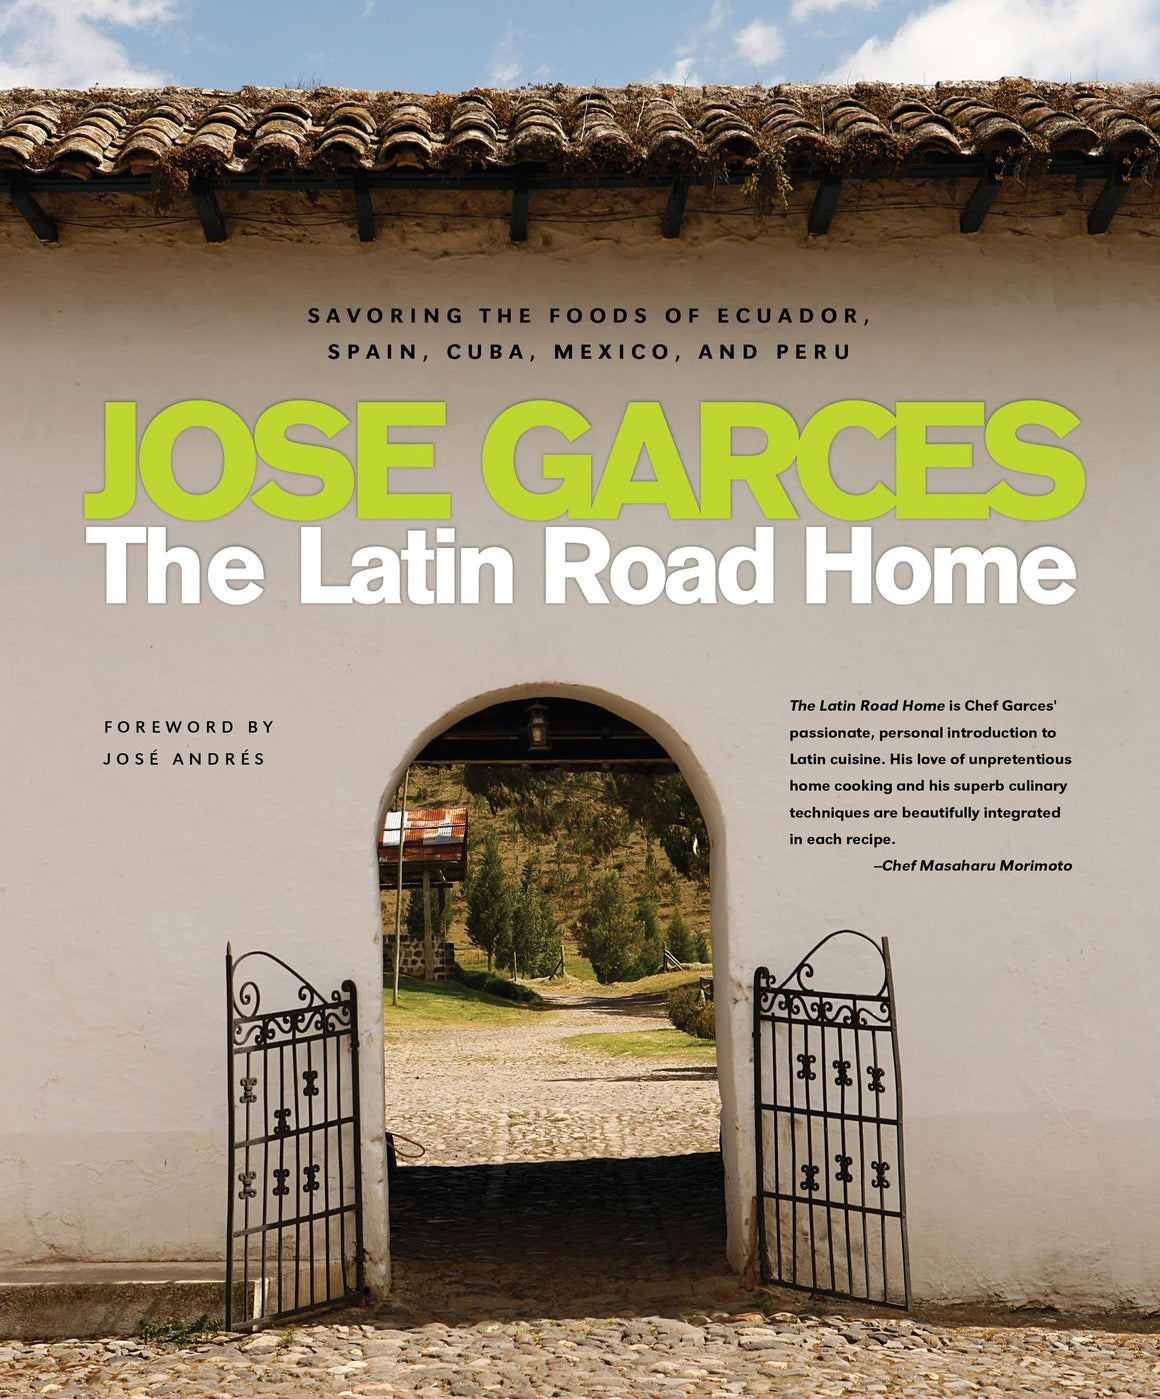 The Latin Road Home: Savoring the Foods of Ecuador, Spain, Cuba, Mexico, and Peru (Jose Garces)